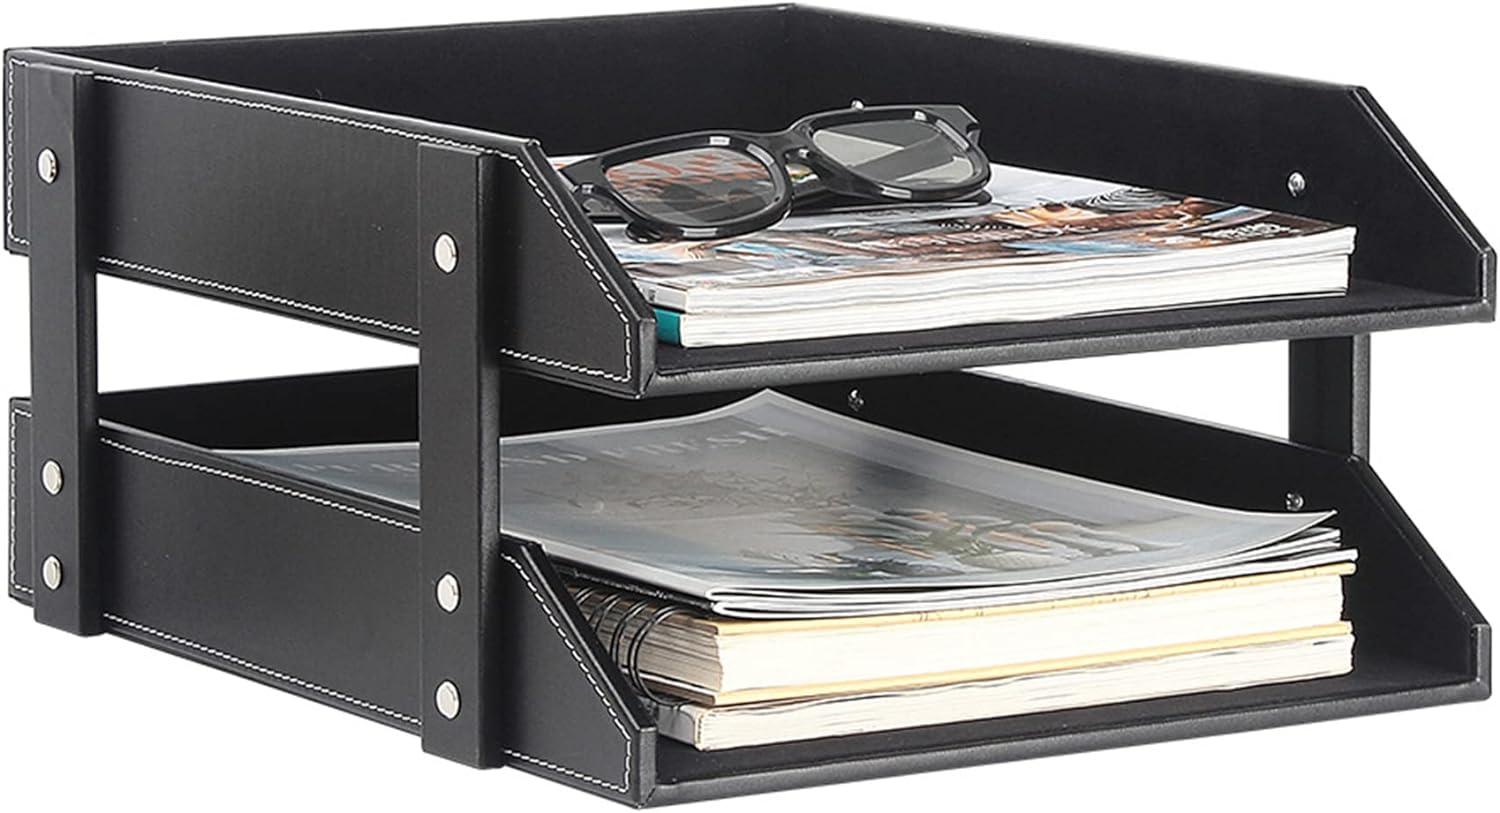 edirftra 2 tier leather document tray holder paper organizer tray a4 file folder rack paper document magazine